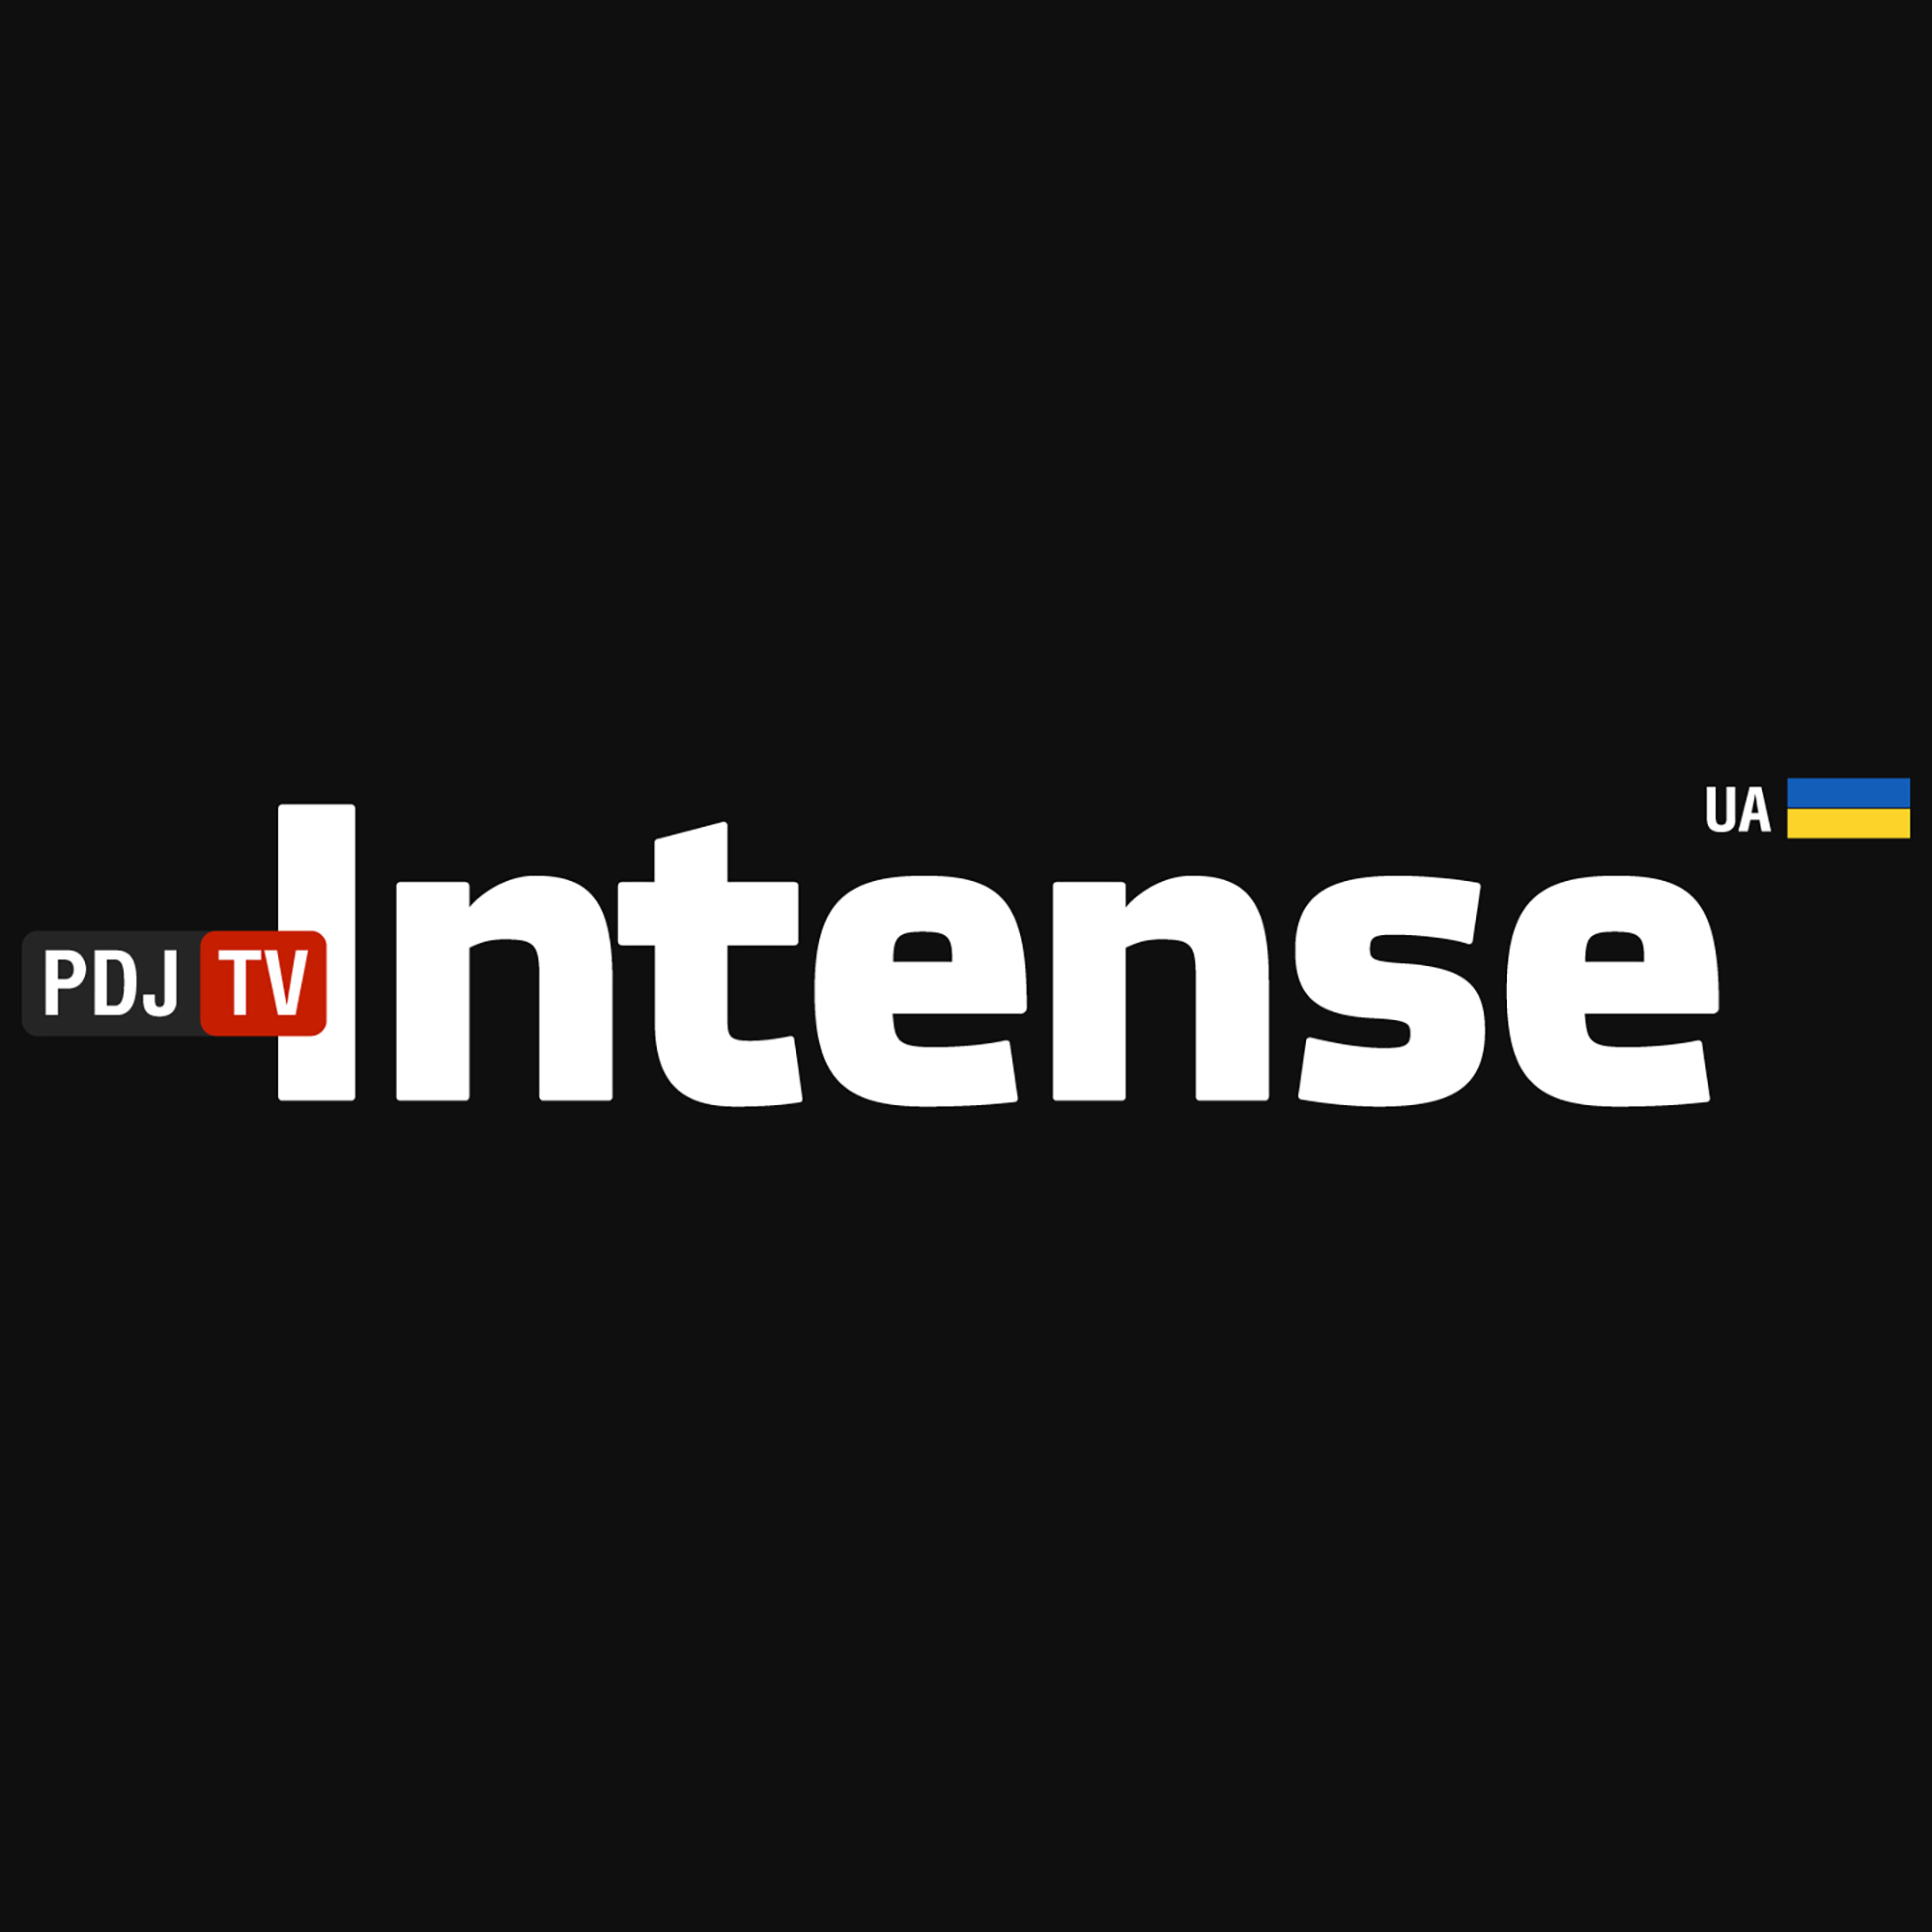 PDJTV INTENSE (UA)